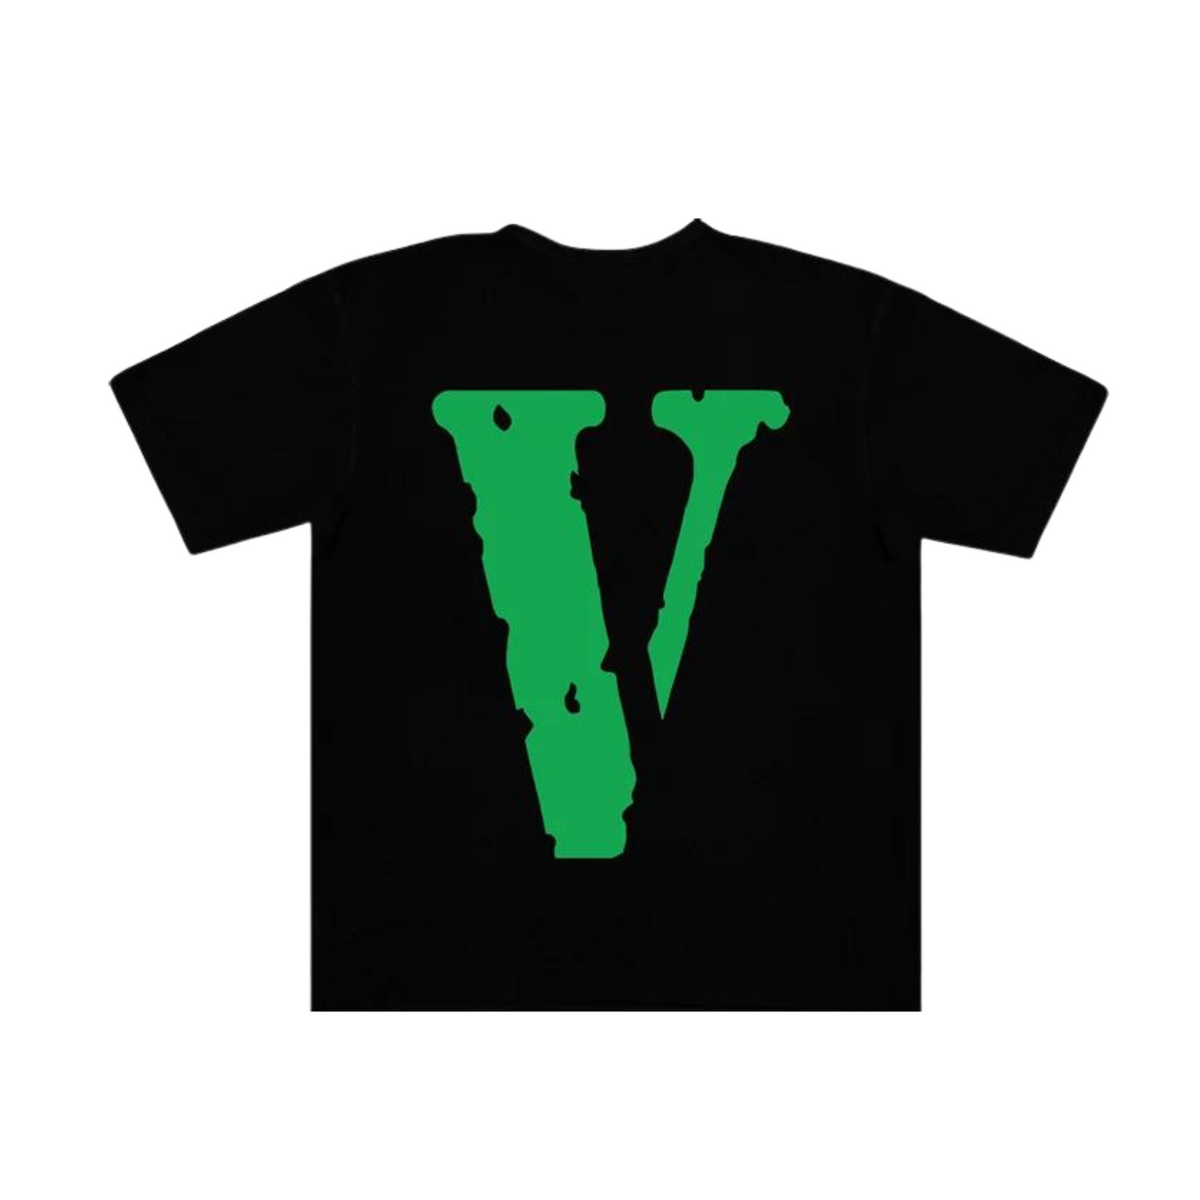 Vlone Staple T-shirt "Black/Green"